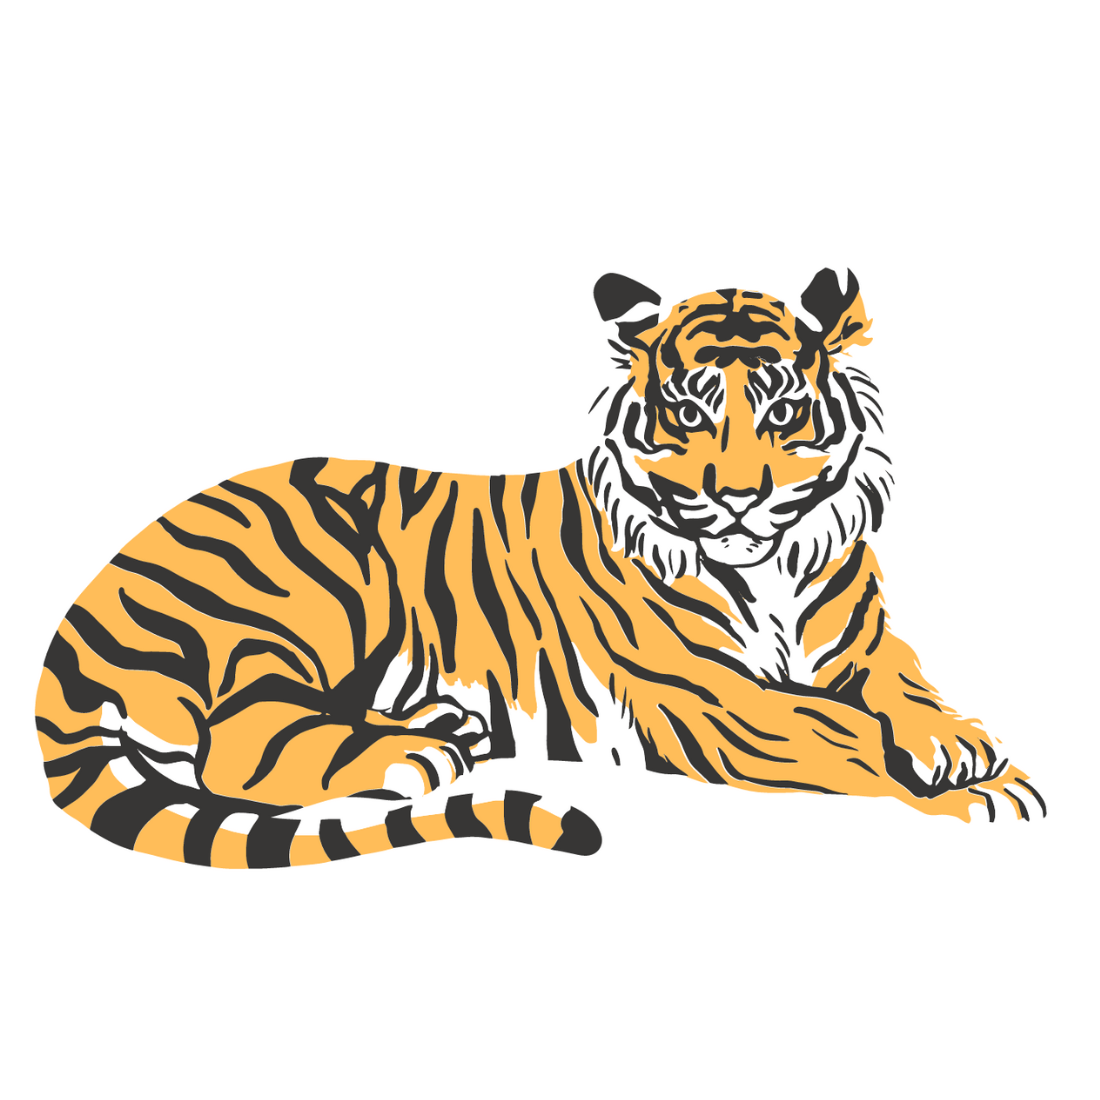 Tiger logo symbolizes strength and power preview image.